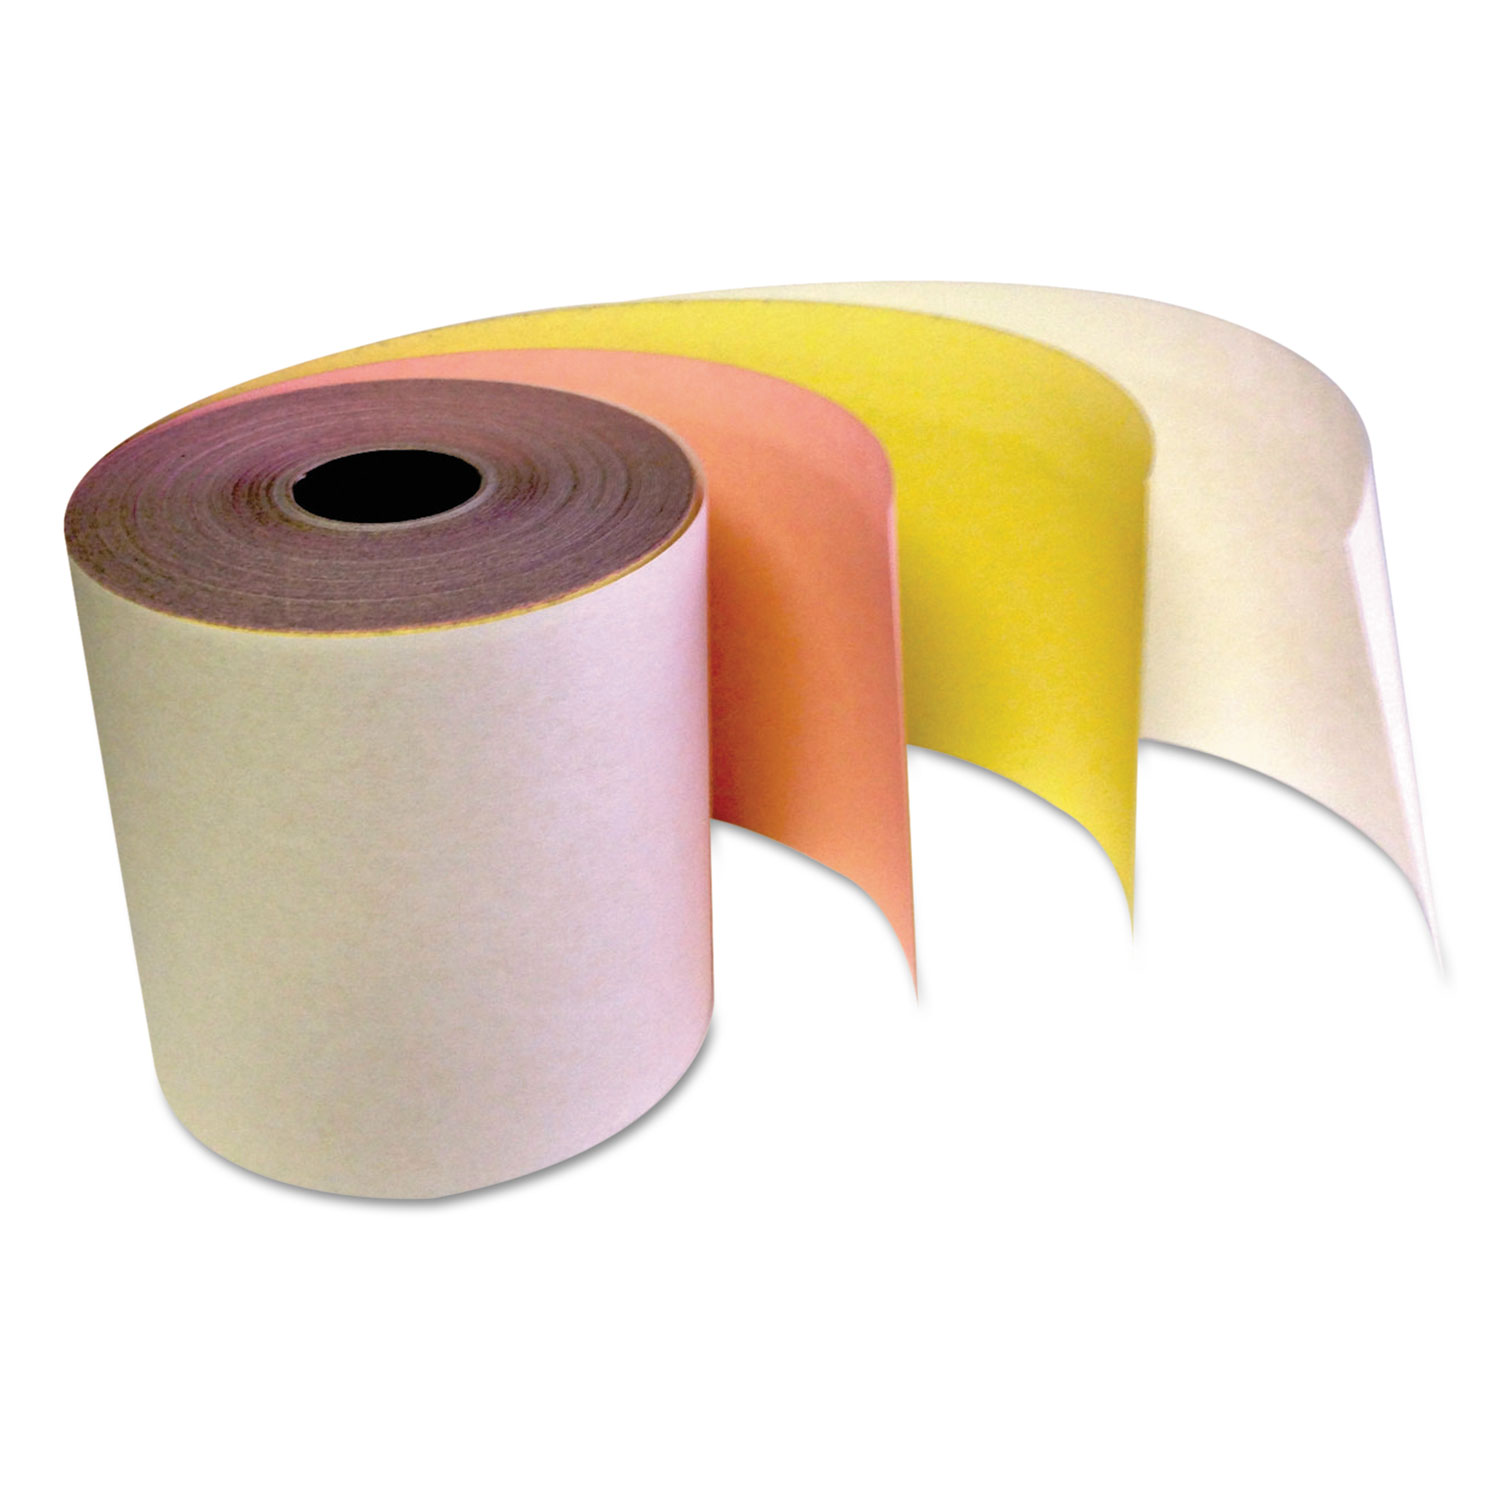  IMPRESO 341510 Carbonless Receipt Rolls, 3 x 67 ft, White/Canary/Pink, 60/Carton (TST341510) 